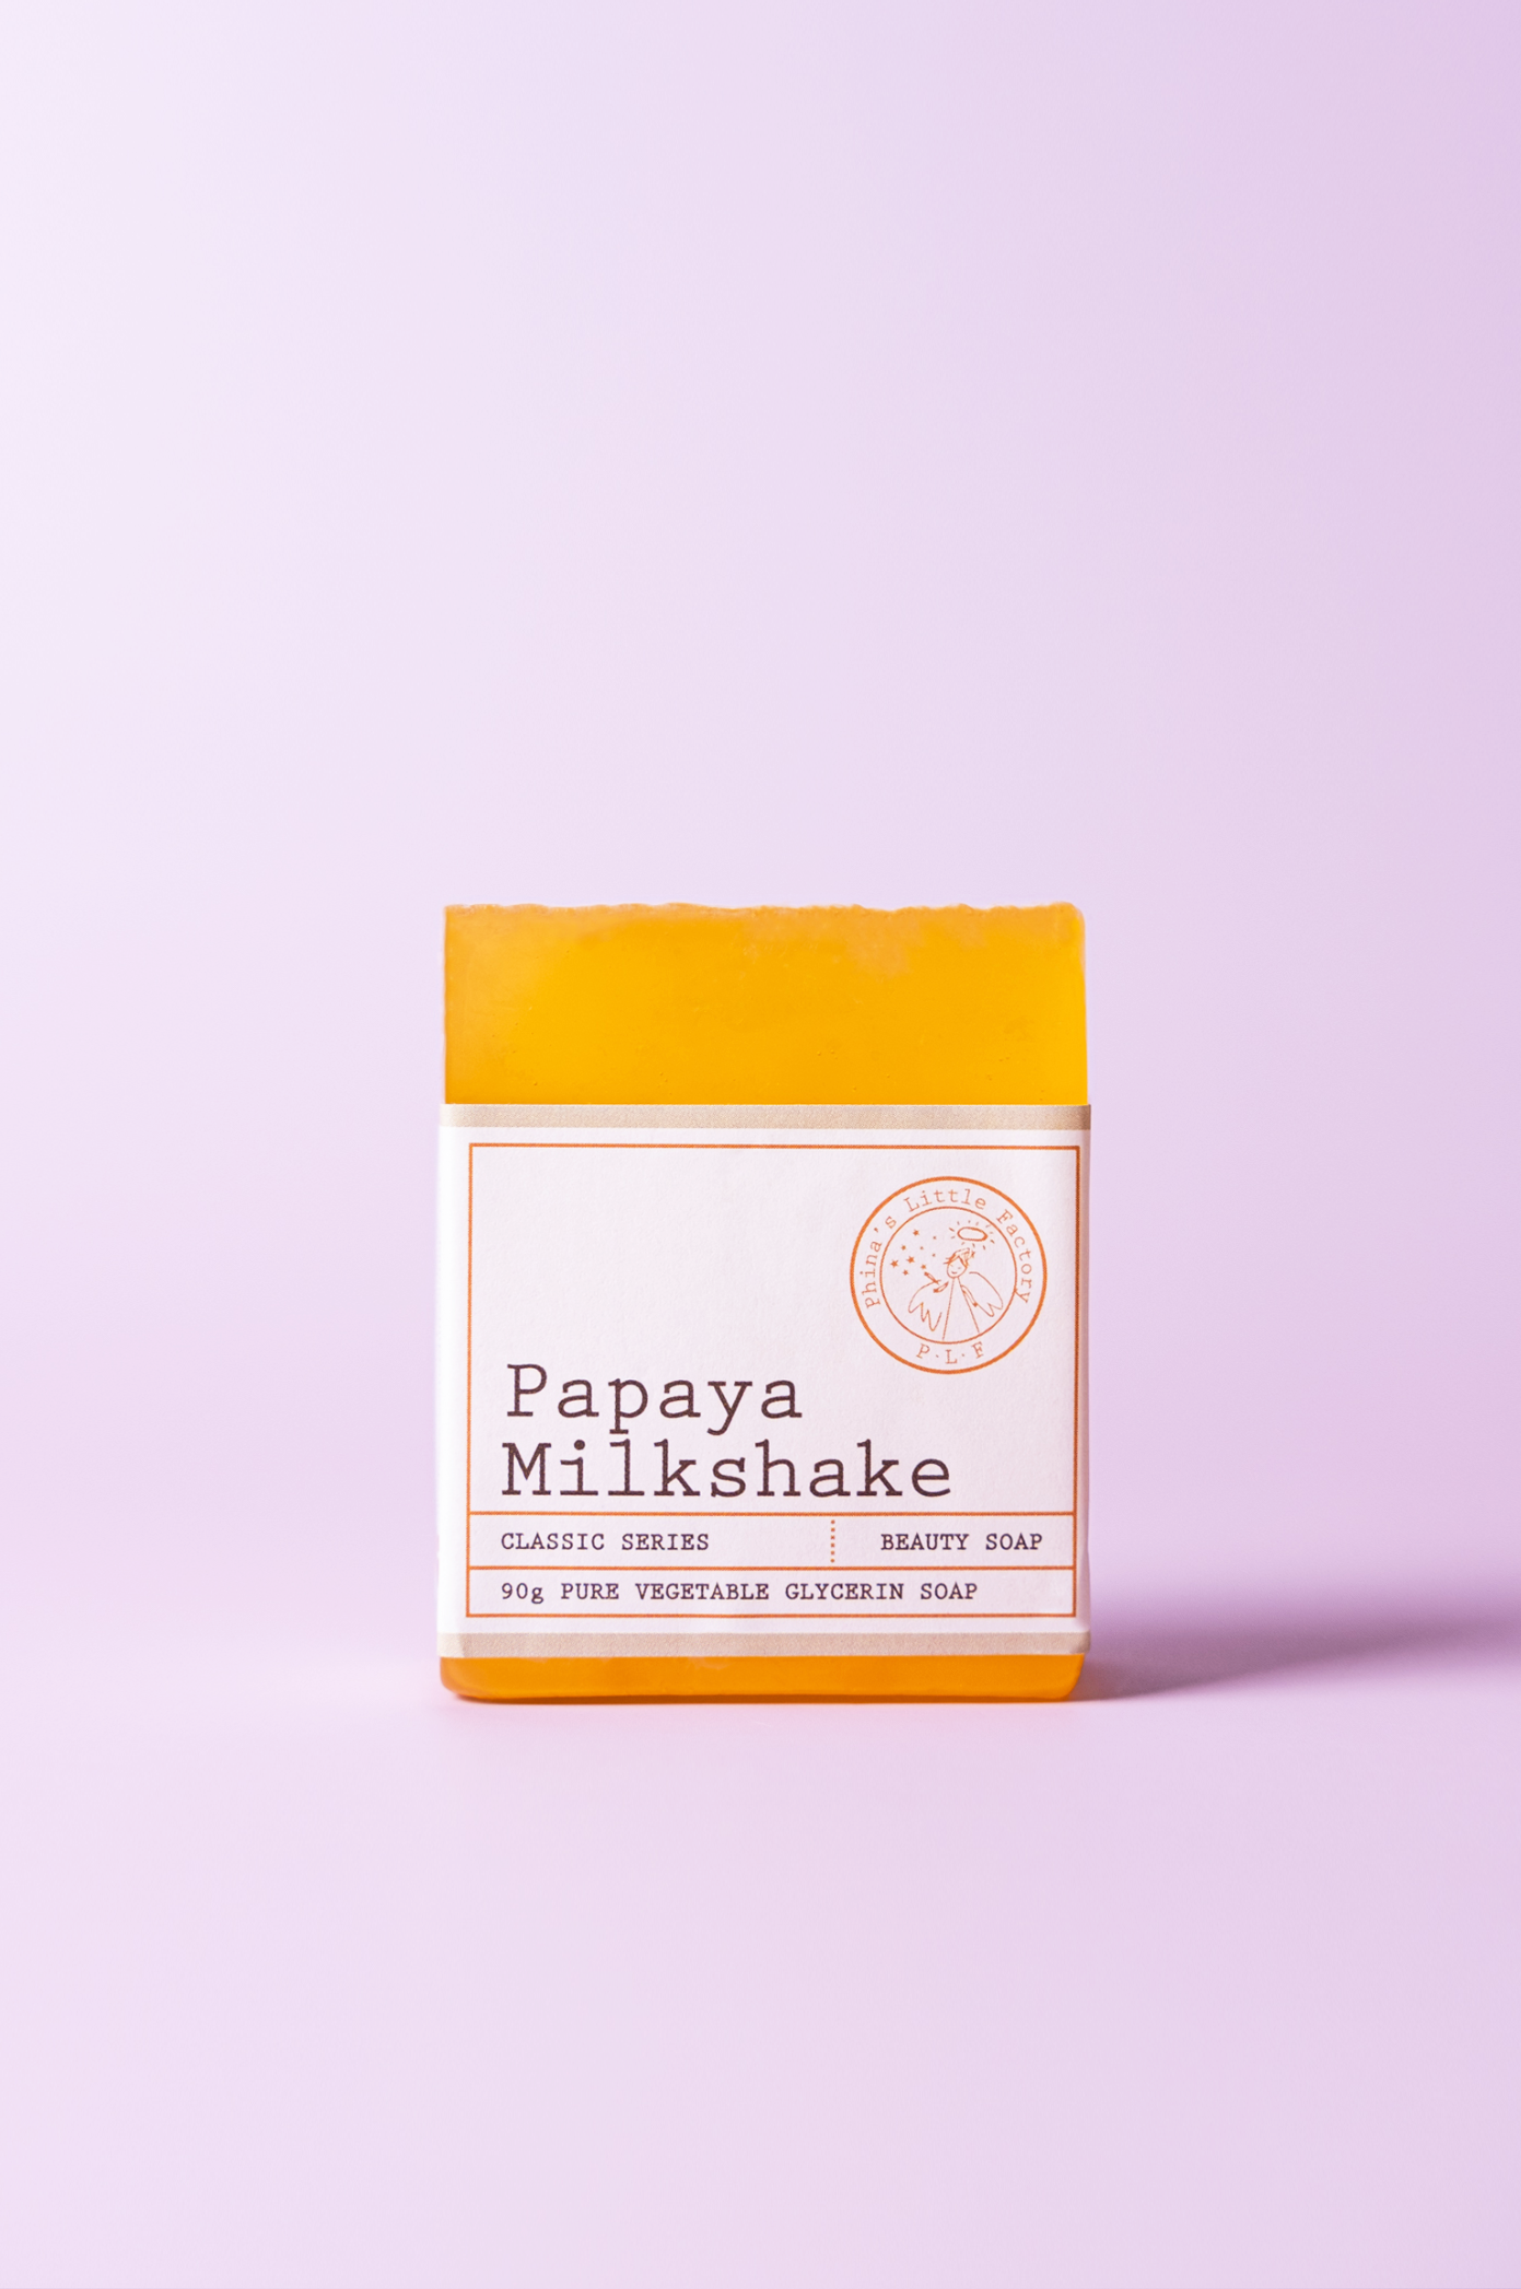 Papaya Milkshake Beauty Soap